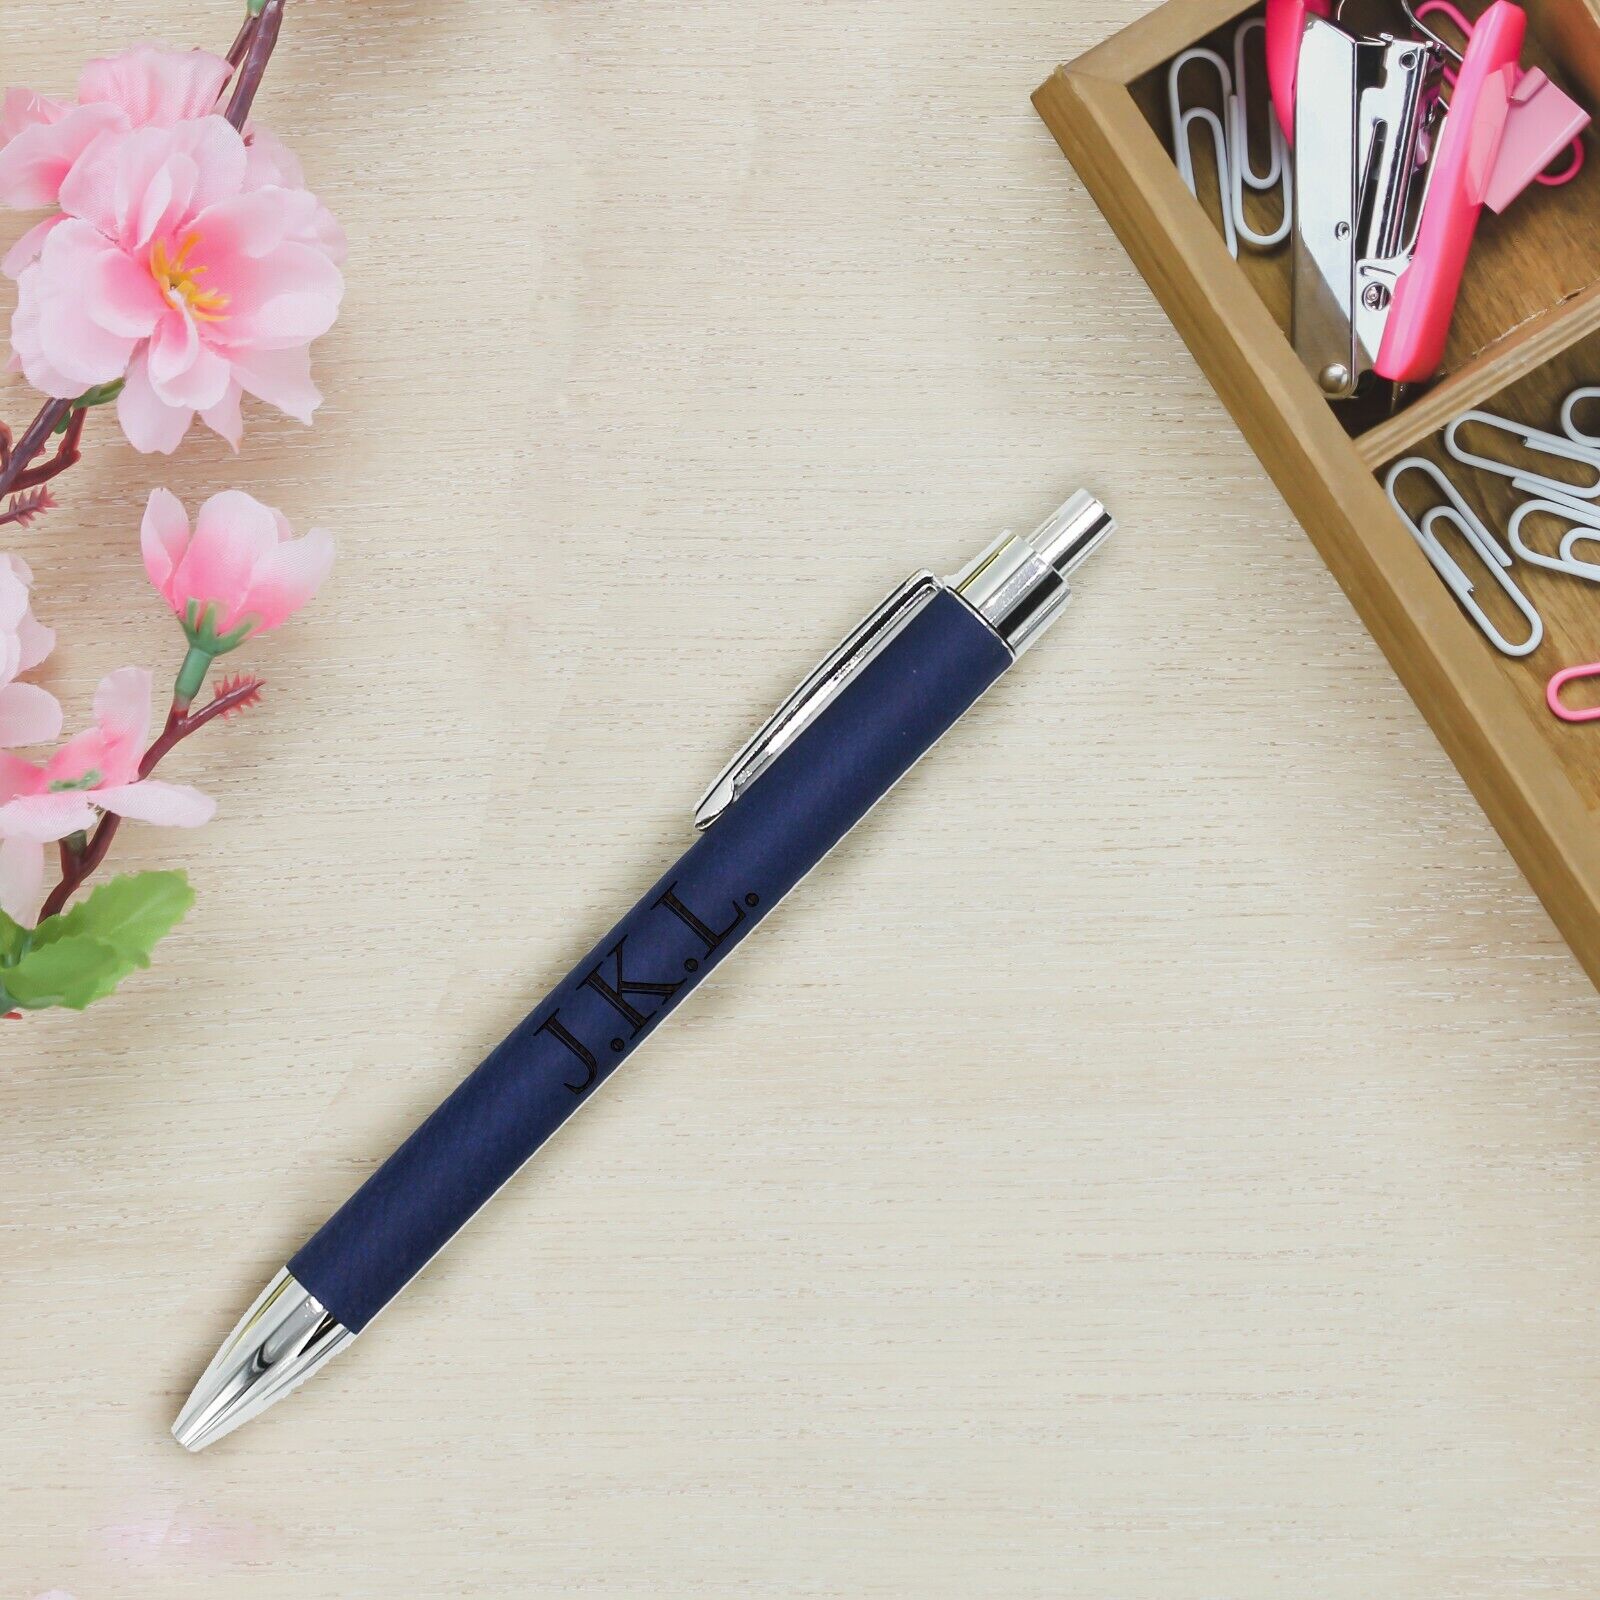 Custom Pen - Monogrammed Pen - Engraved Pen - Personalized Pen - Customized Pen